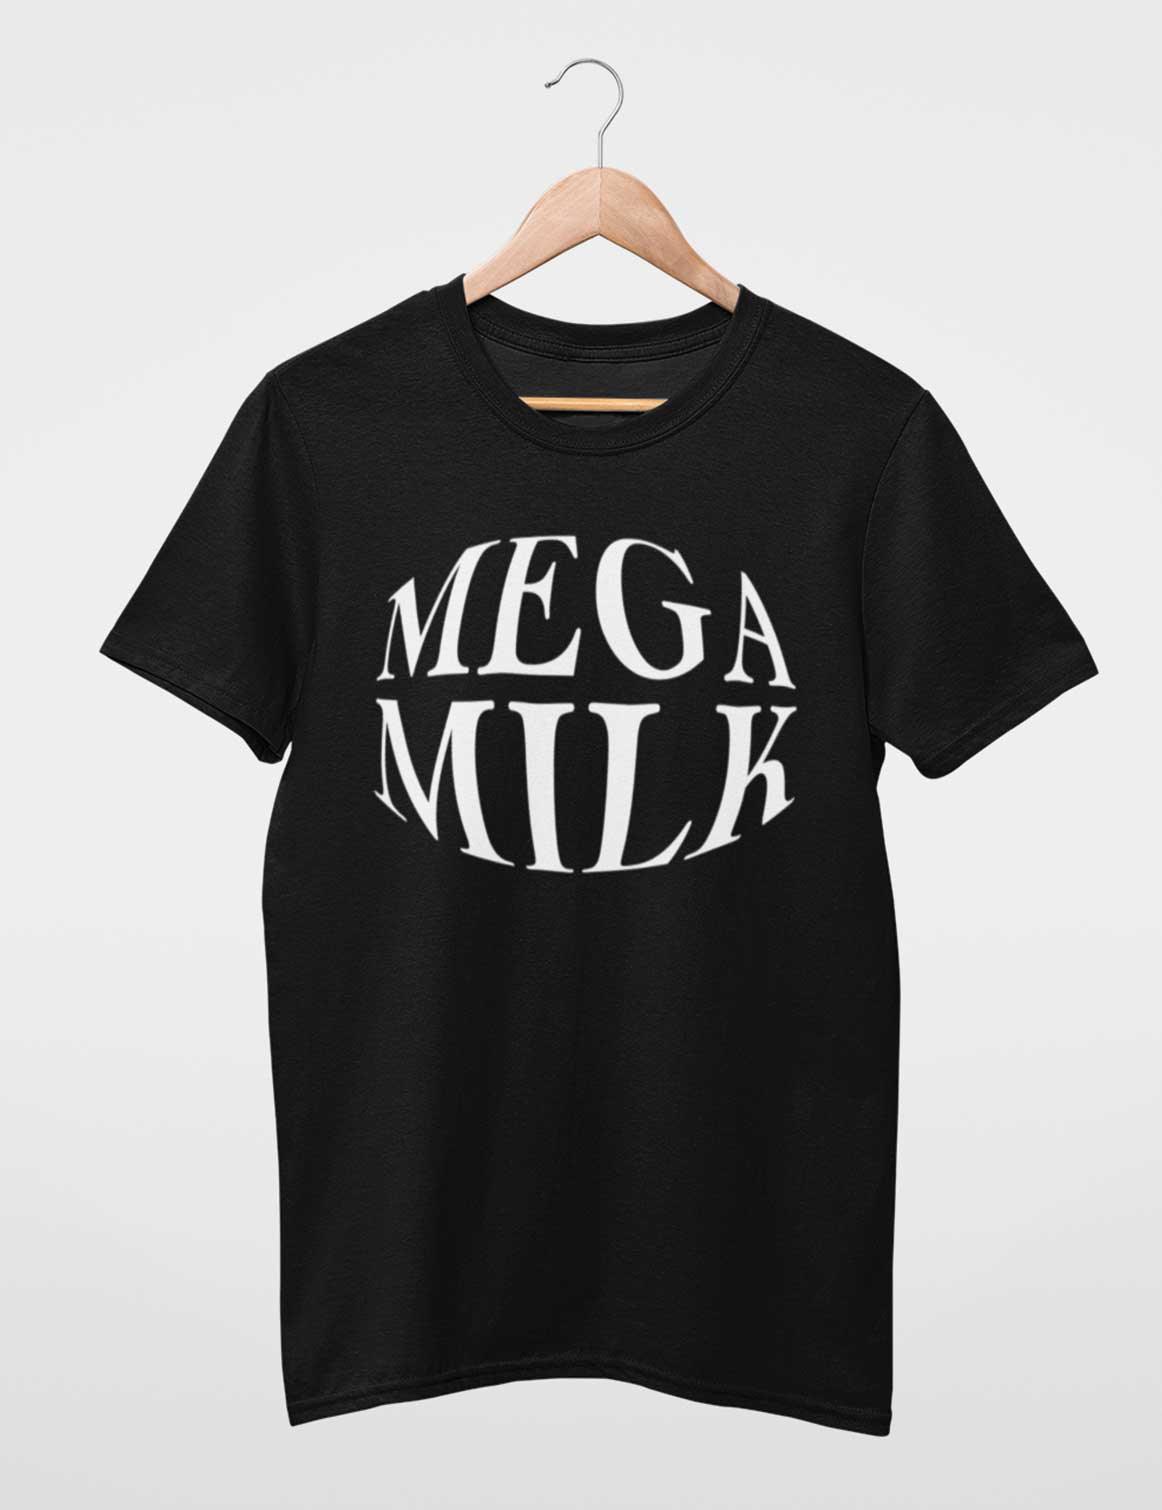 Cerebrum Havoc Exclude Mega Milk T-Shirt - Hokoriwear